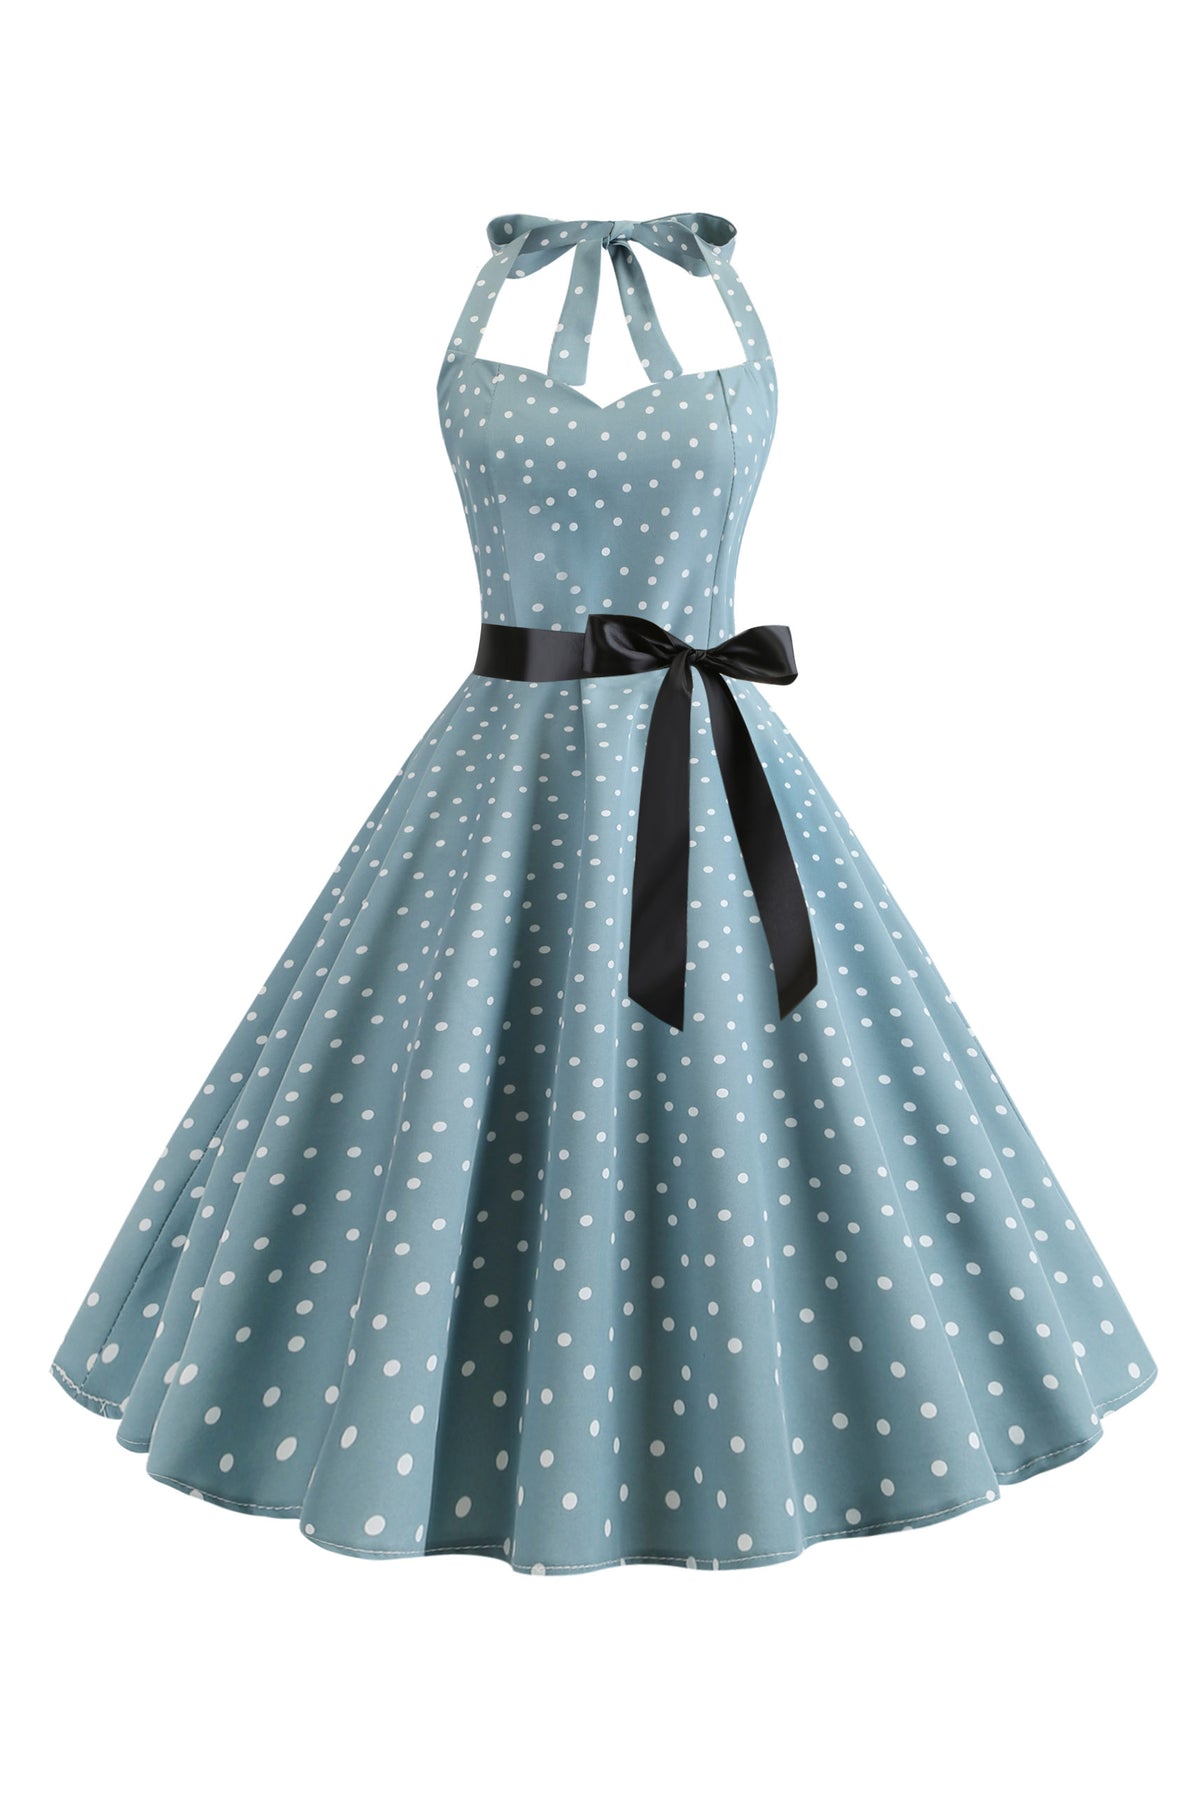 Vintage Halter Pin Dot Swing Dress with Ribbon